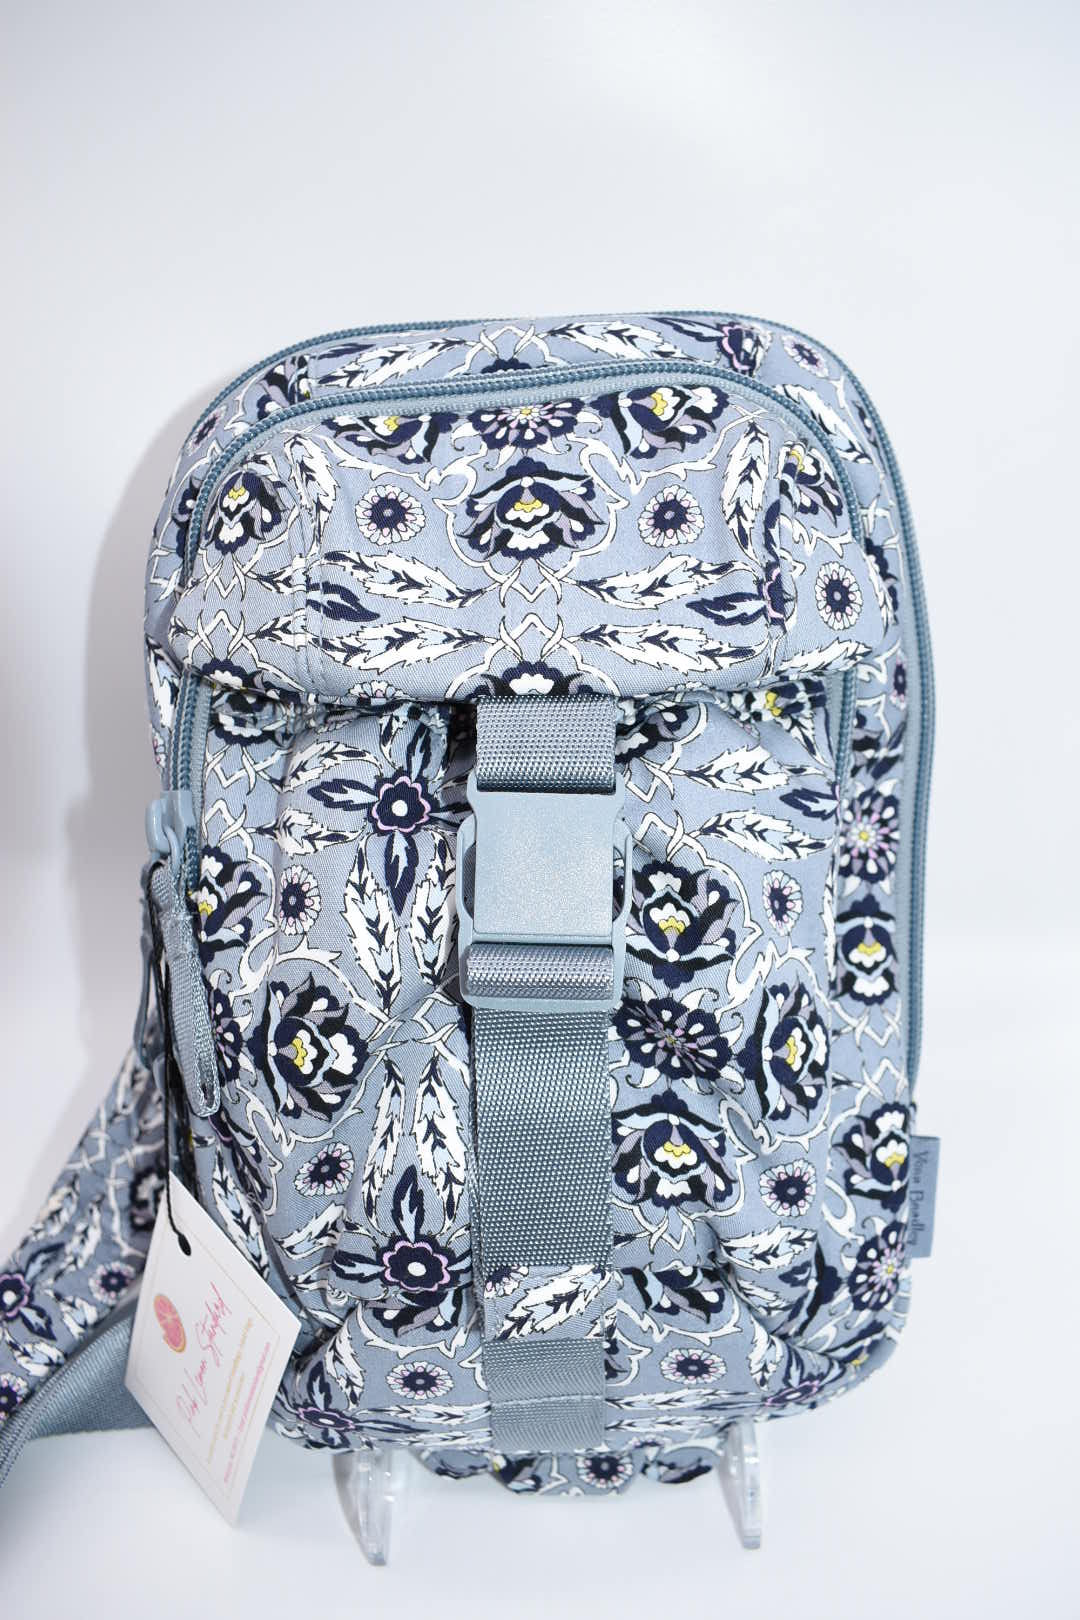 Vera Bradley Utility Sling Backpack in "Plaza Tile" Pattern